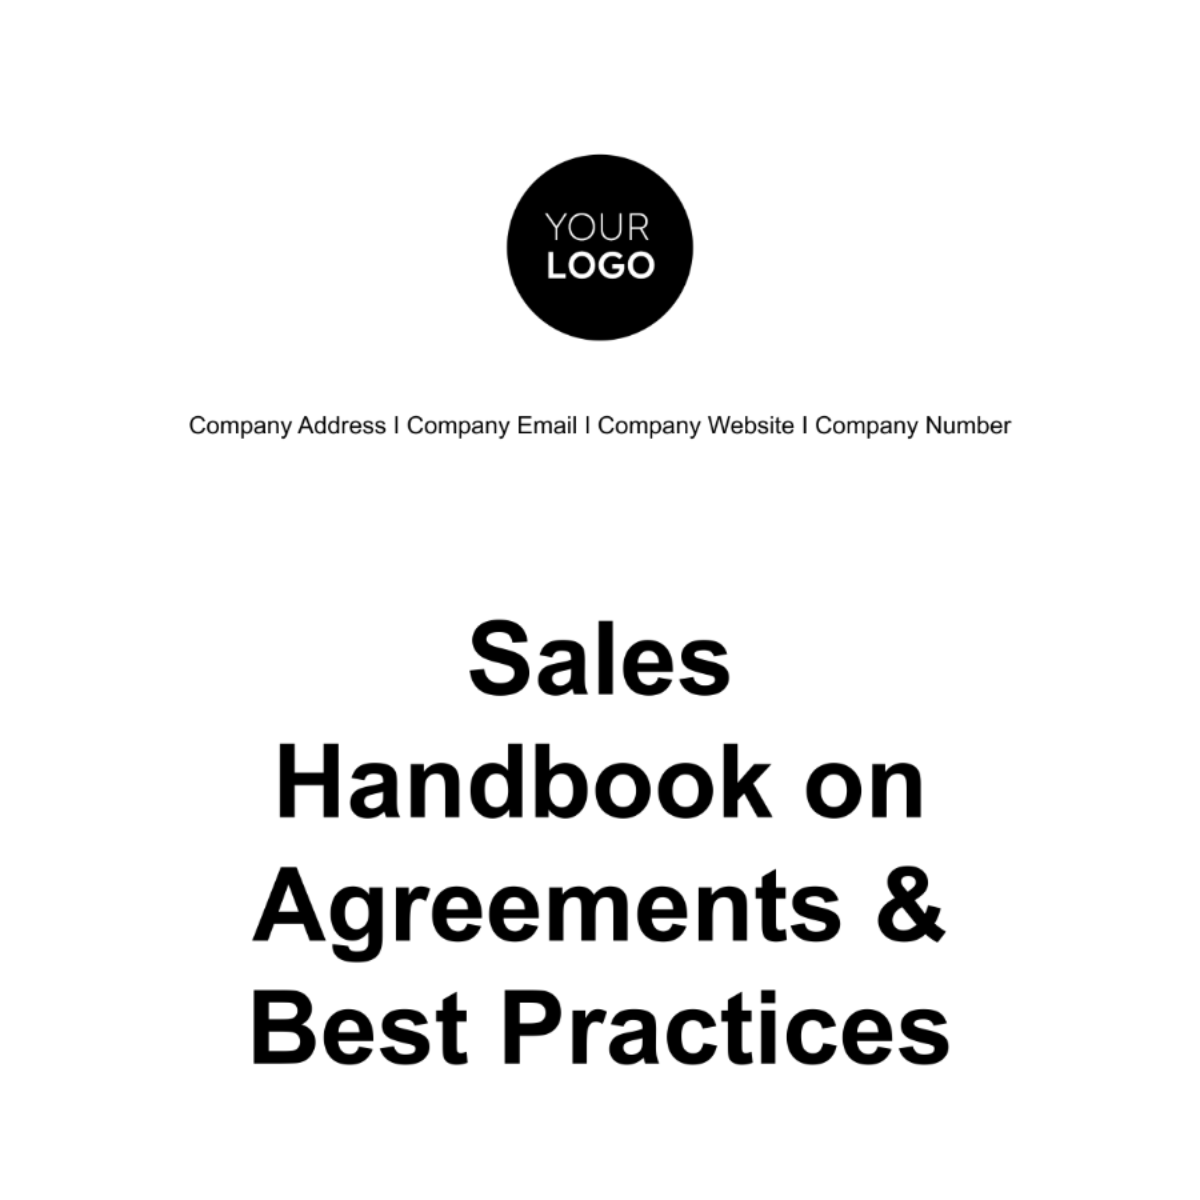 Sales Handbook on Agreements & Best Practices Template